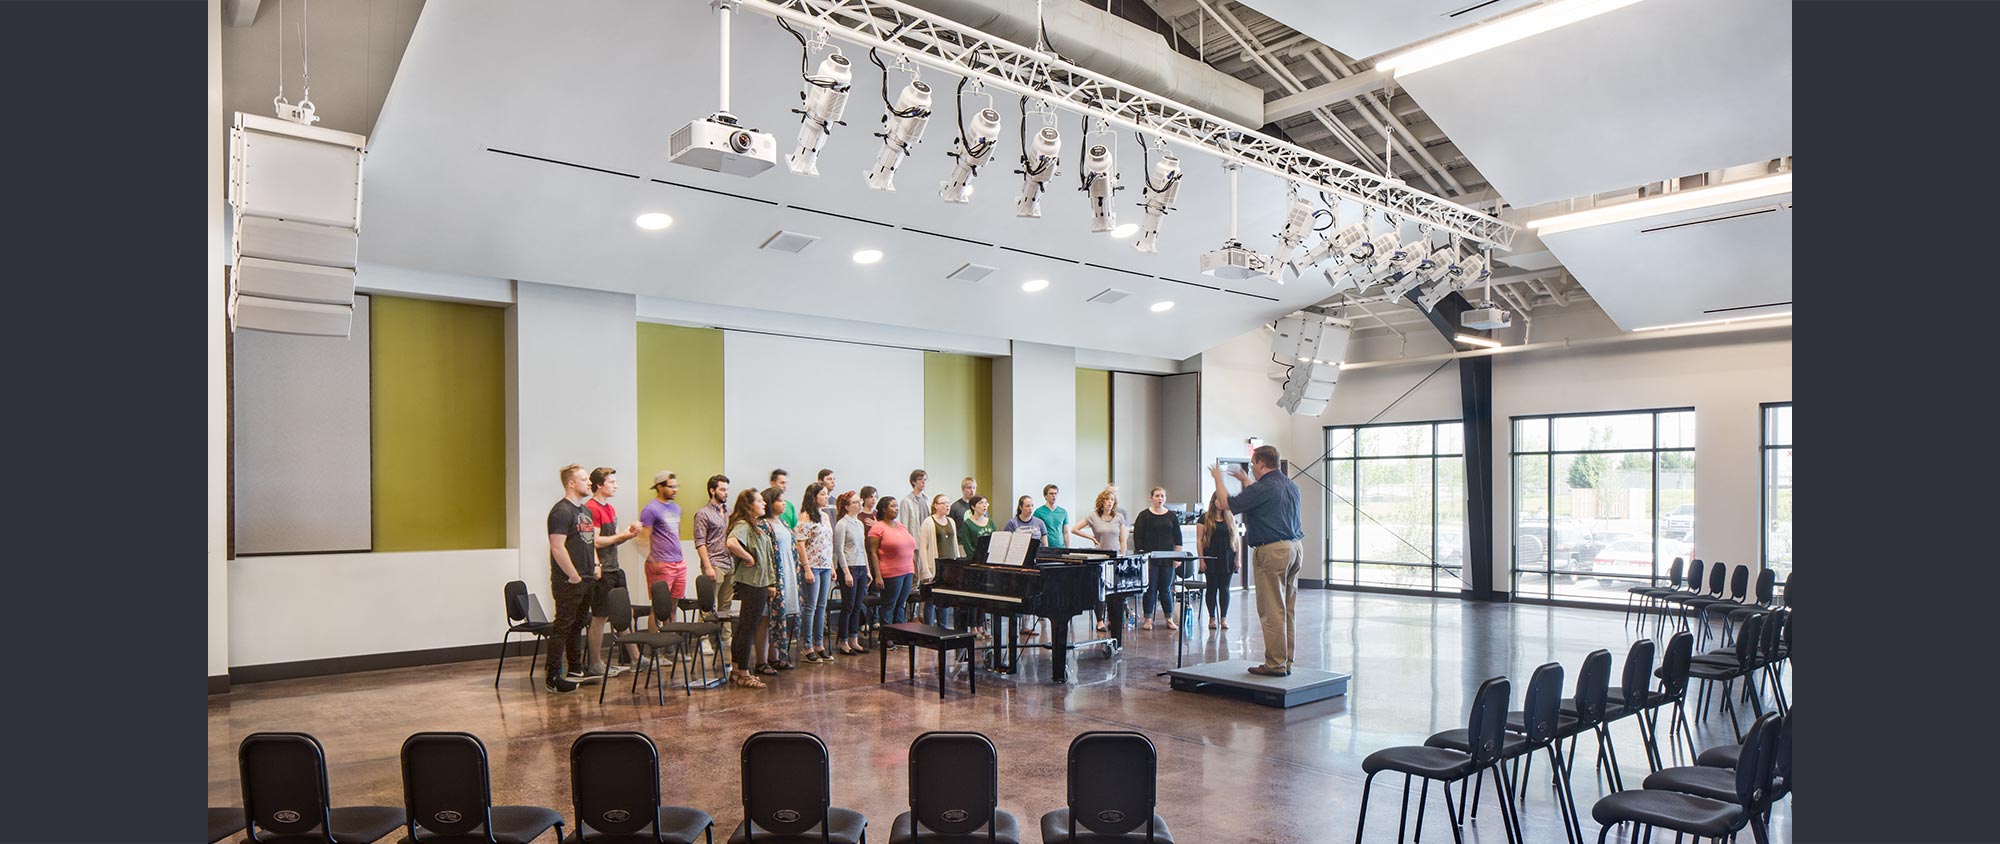 Trevecca Nazarene University, Jackson Center for Music and Worship Arts